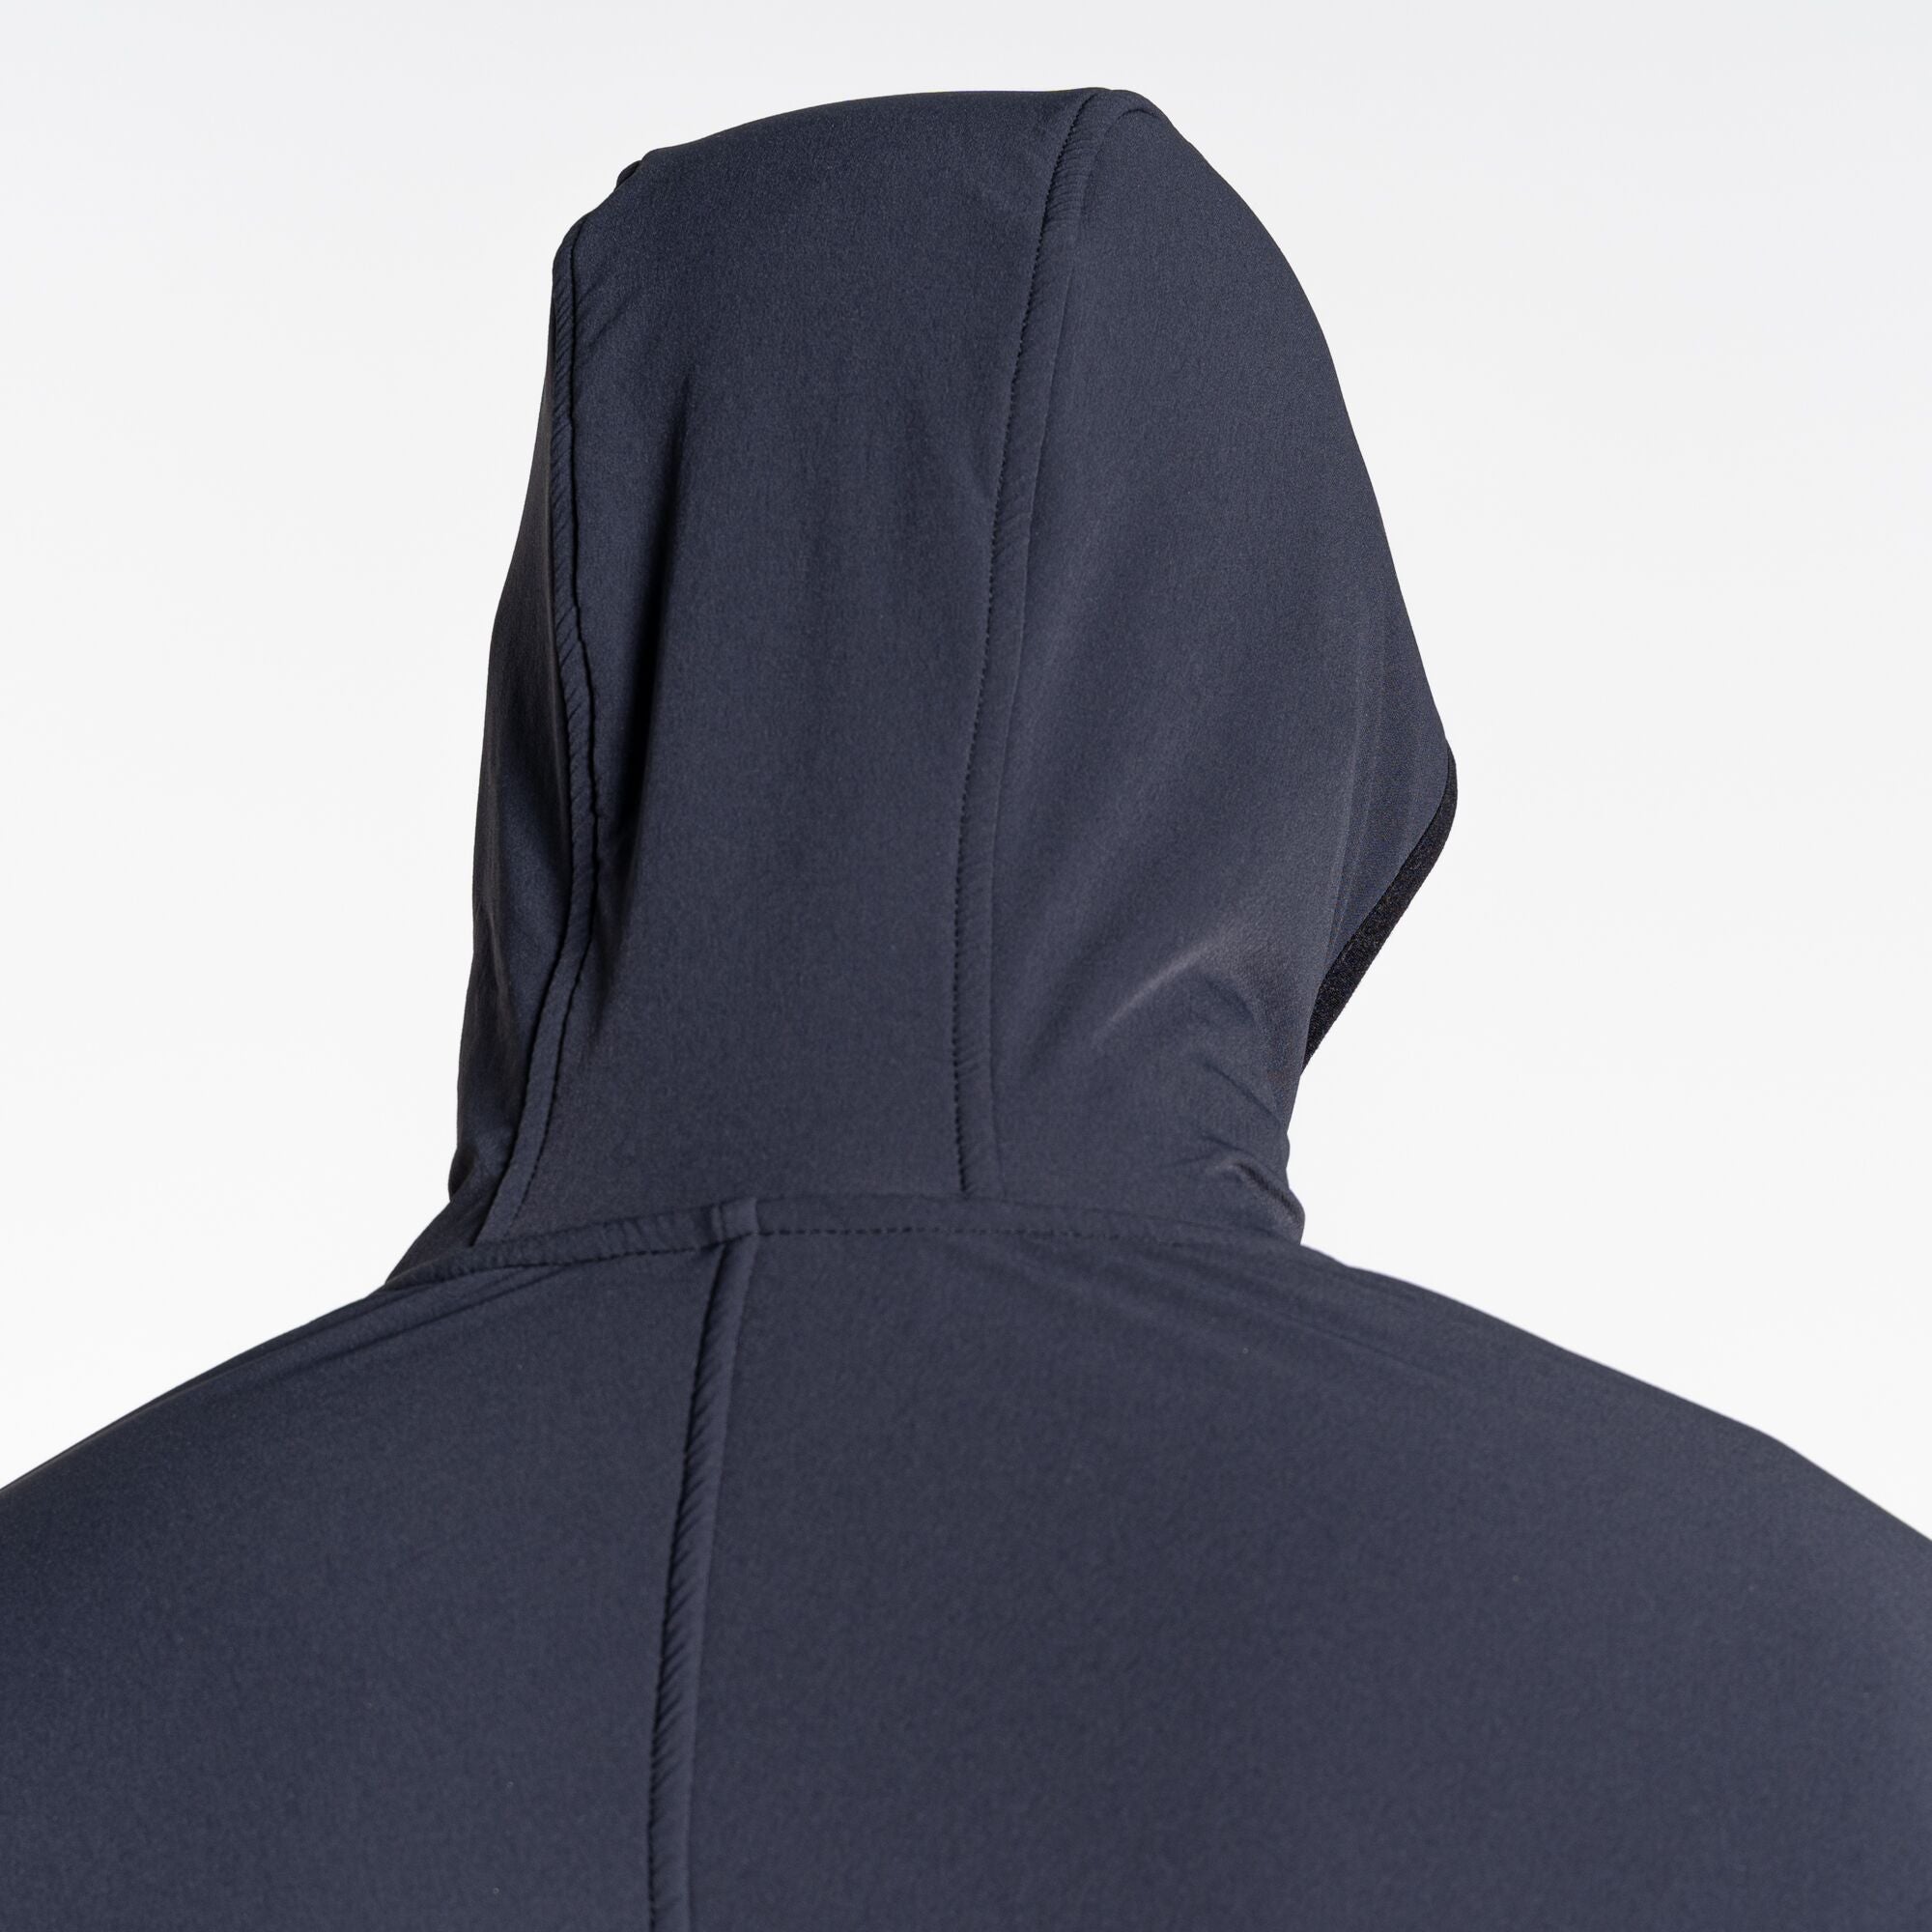 Men's Abrigo Hooded Jacket | Black/Cloud Grey